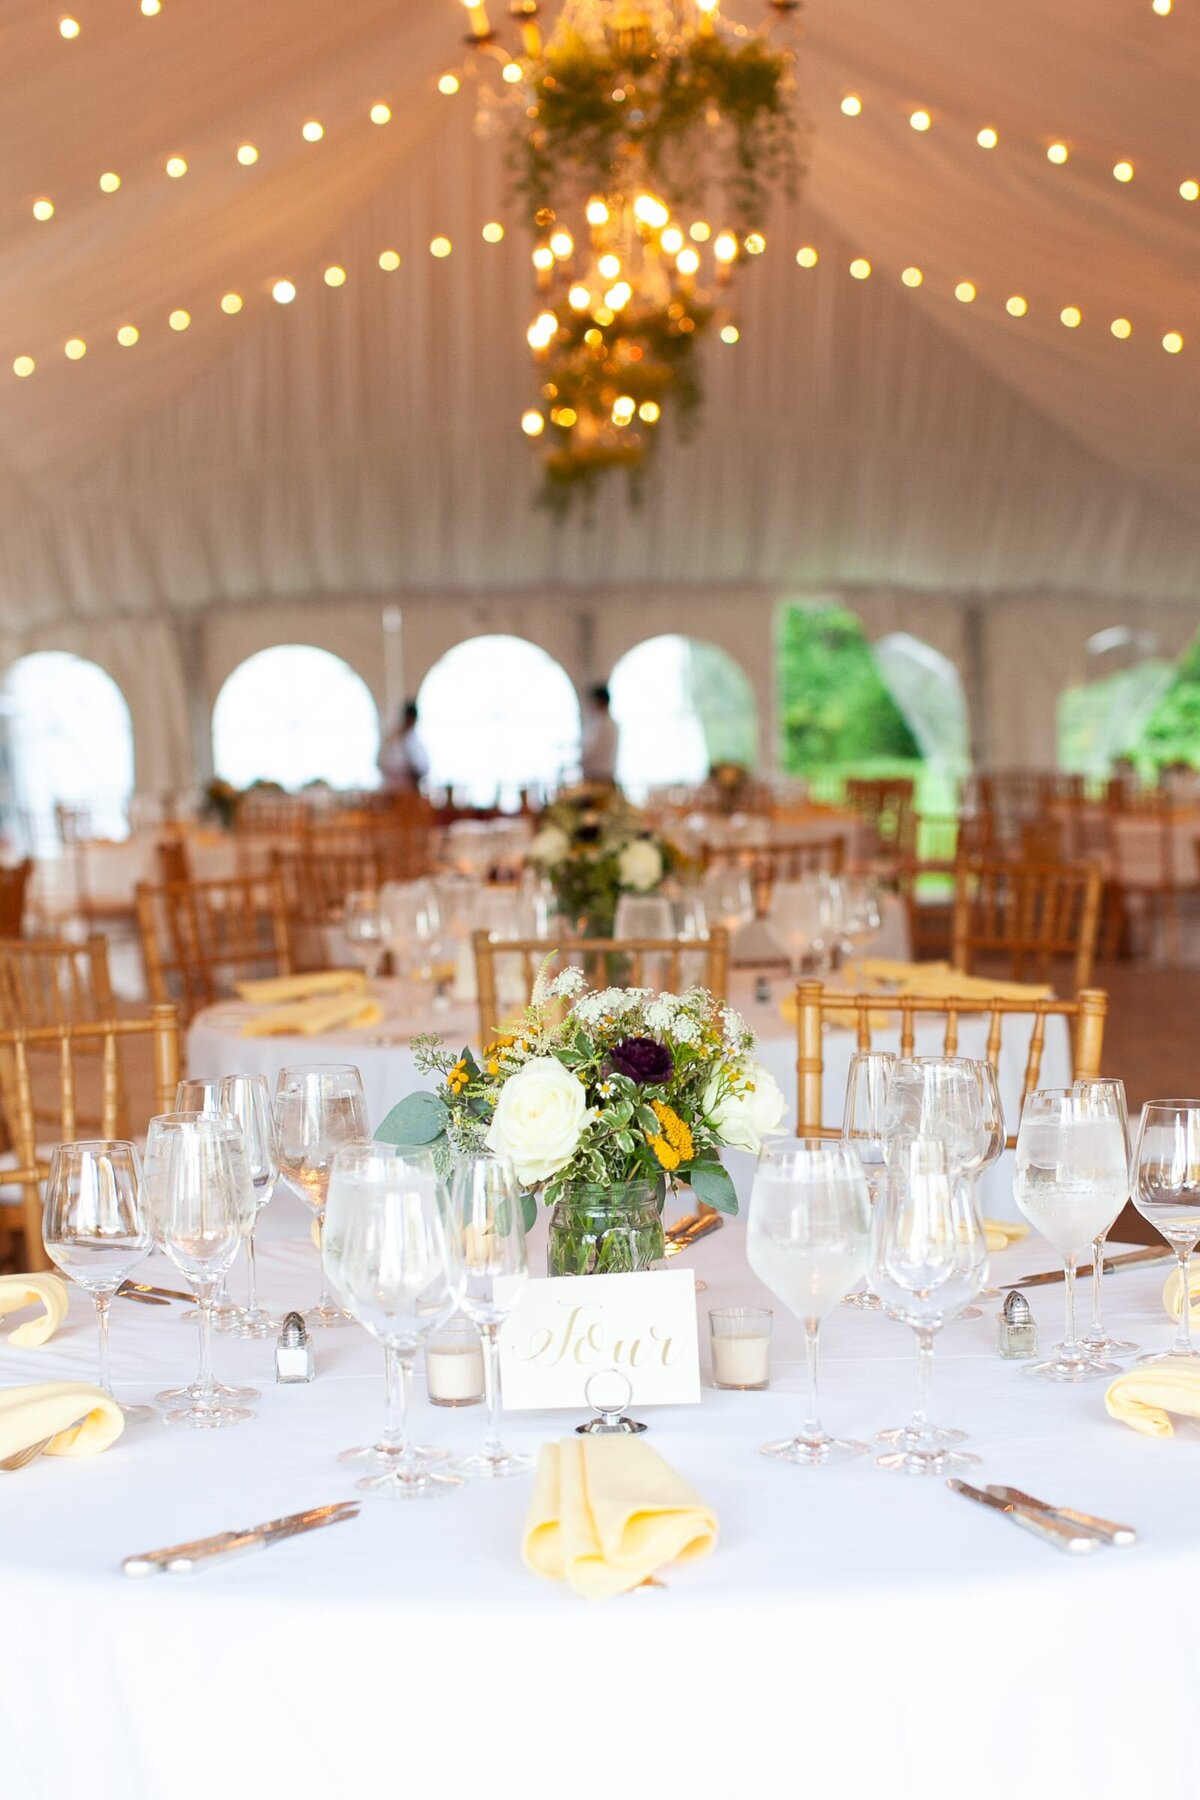 tented-wedding-decor-gold-chivari-chairs